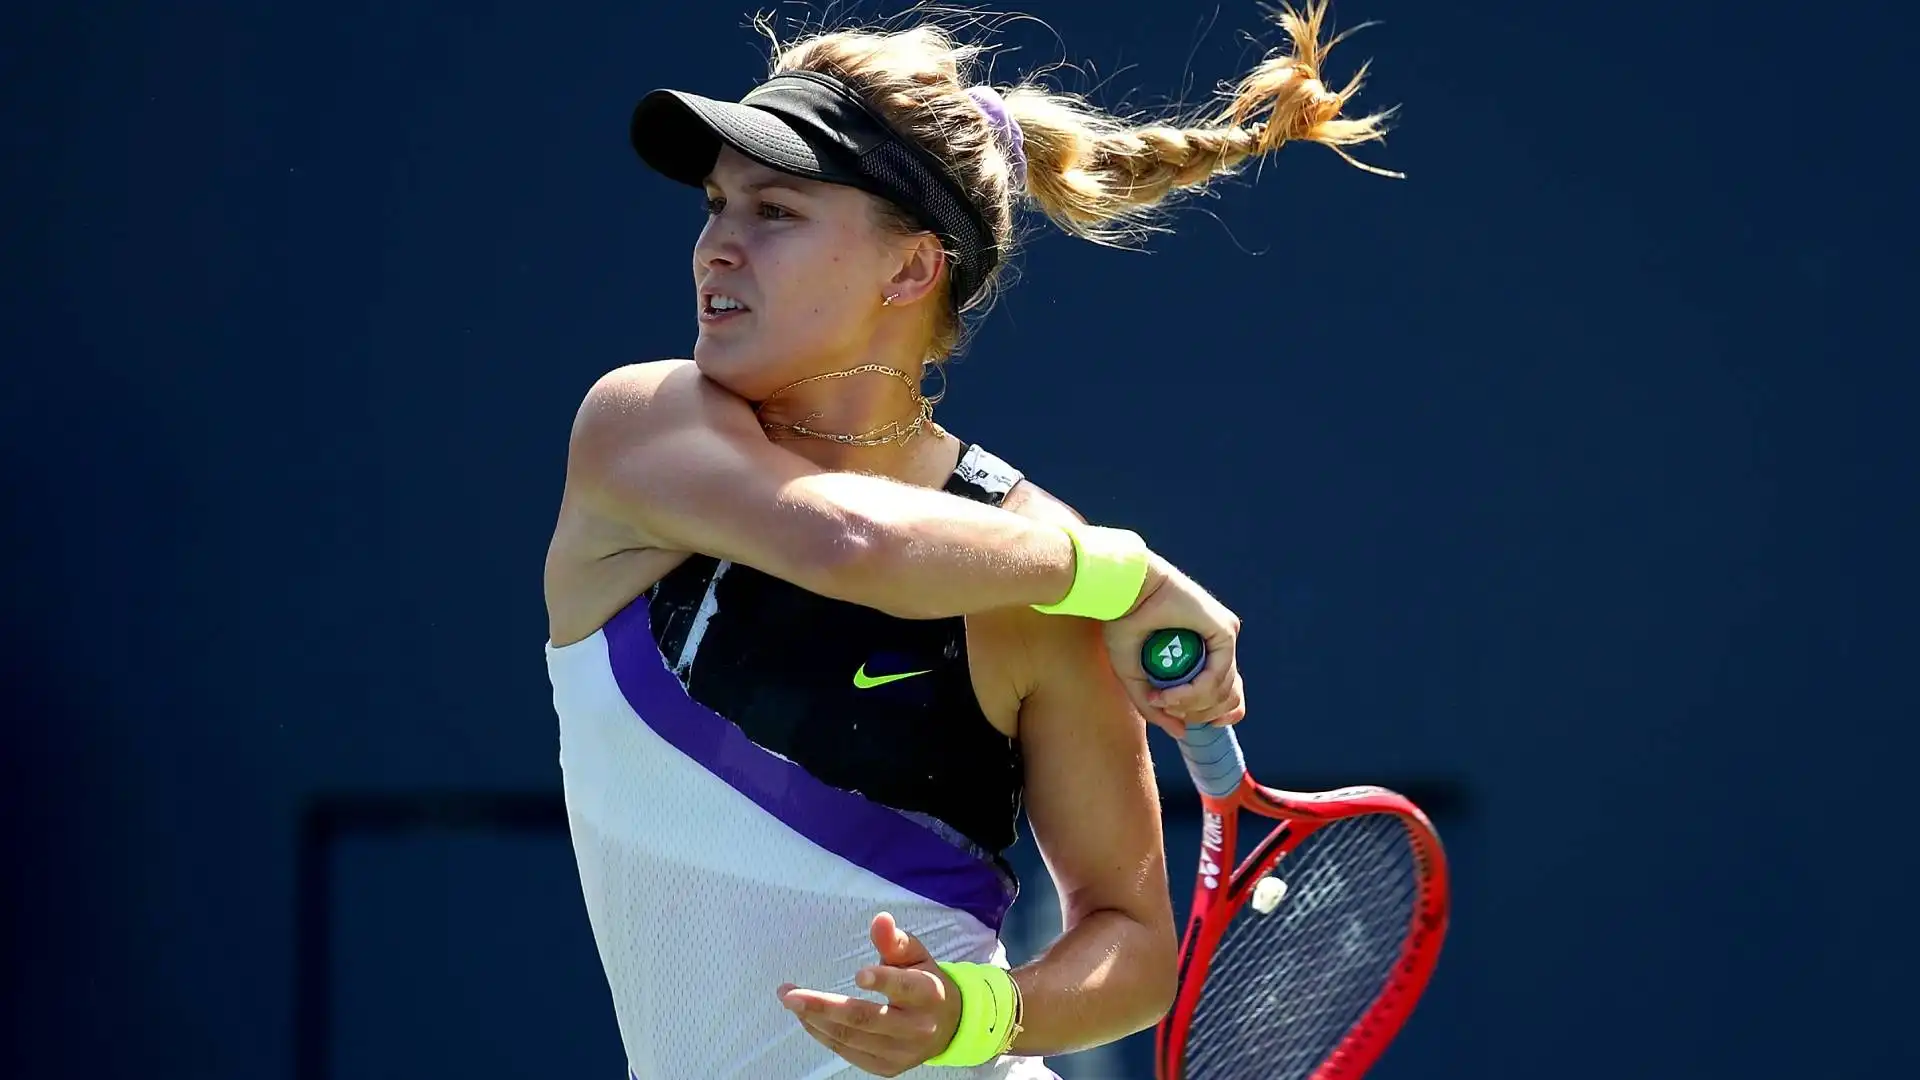 Genie fu sconfitta al primo turno dalla tennista lettone Anastasija Sevastova